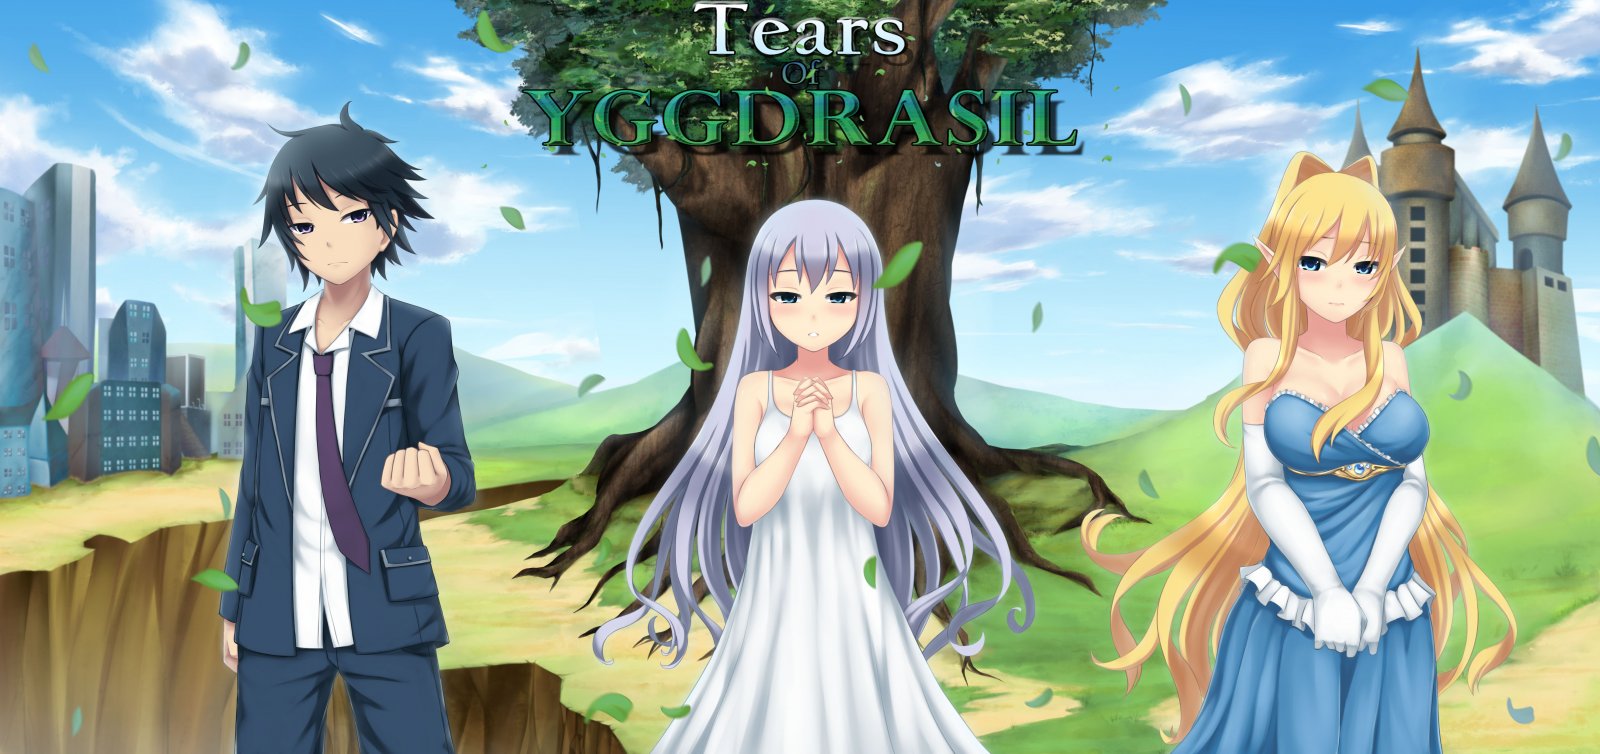 Moonstar - Tears Of Yggdrasi Completed English